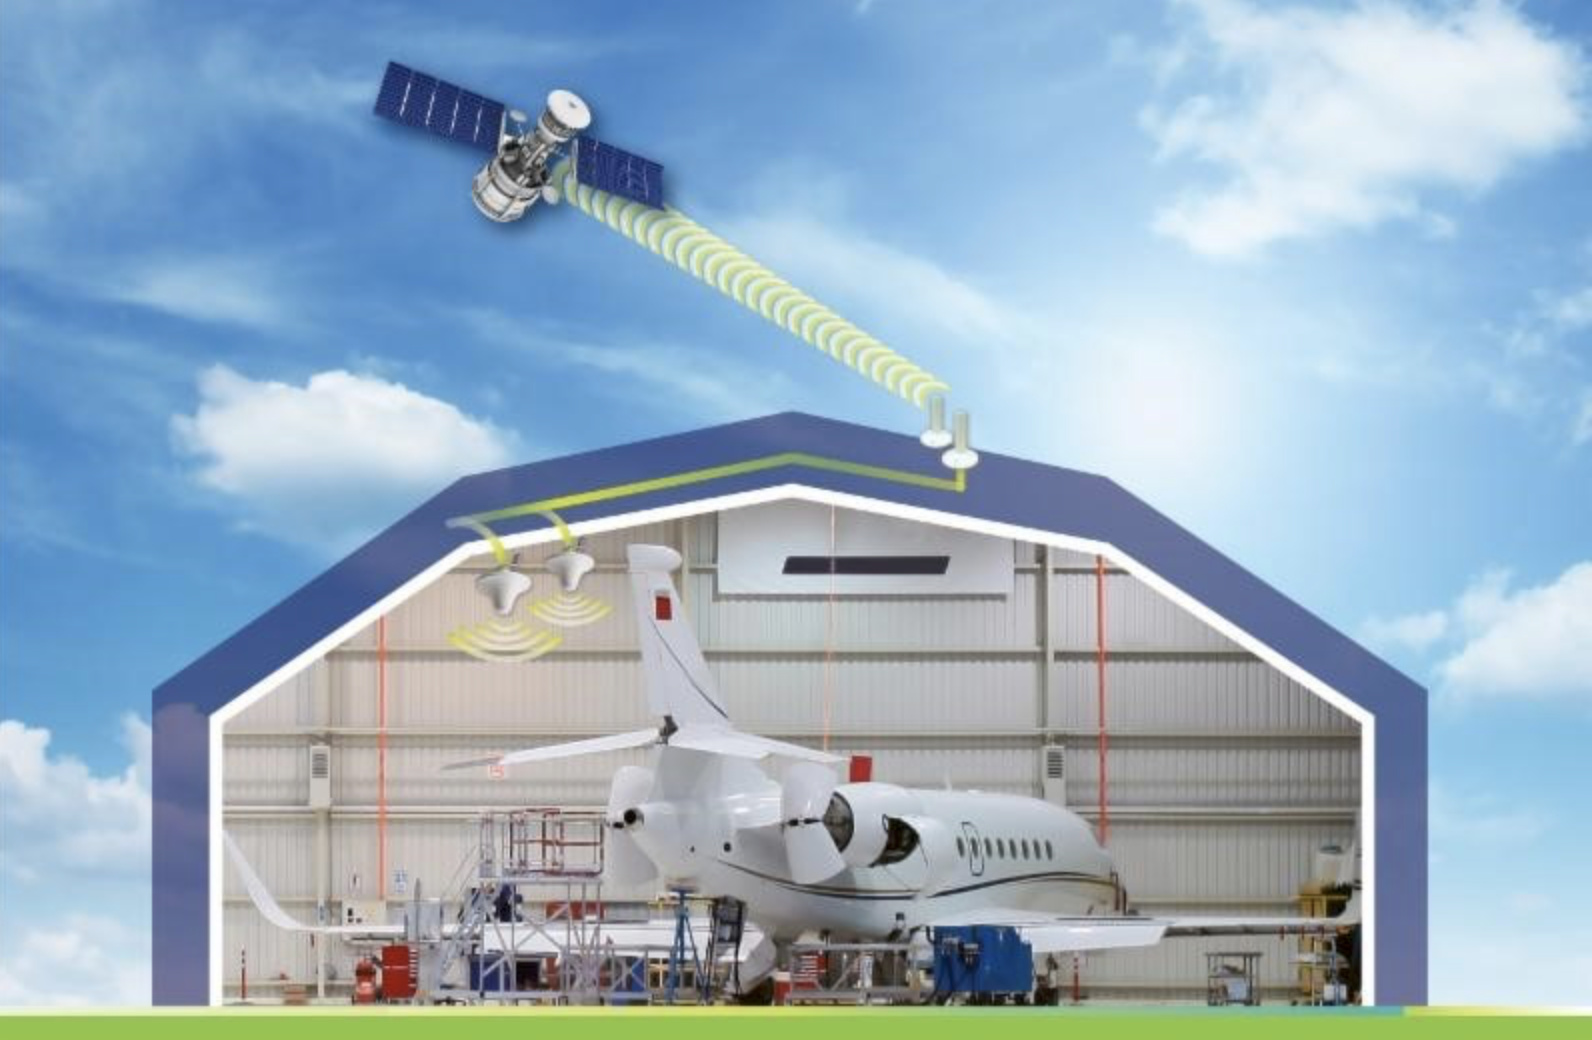 New Hangar Repeater Solution Enables Indoor Avionics Testing of Inmarsat, Iridium, GPS Satellite Signals